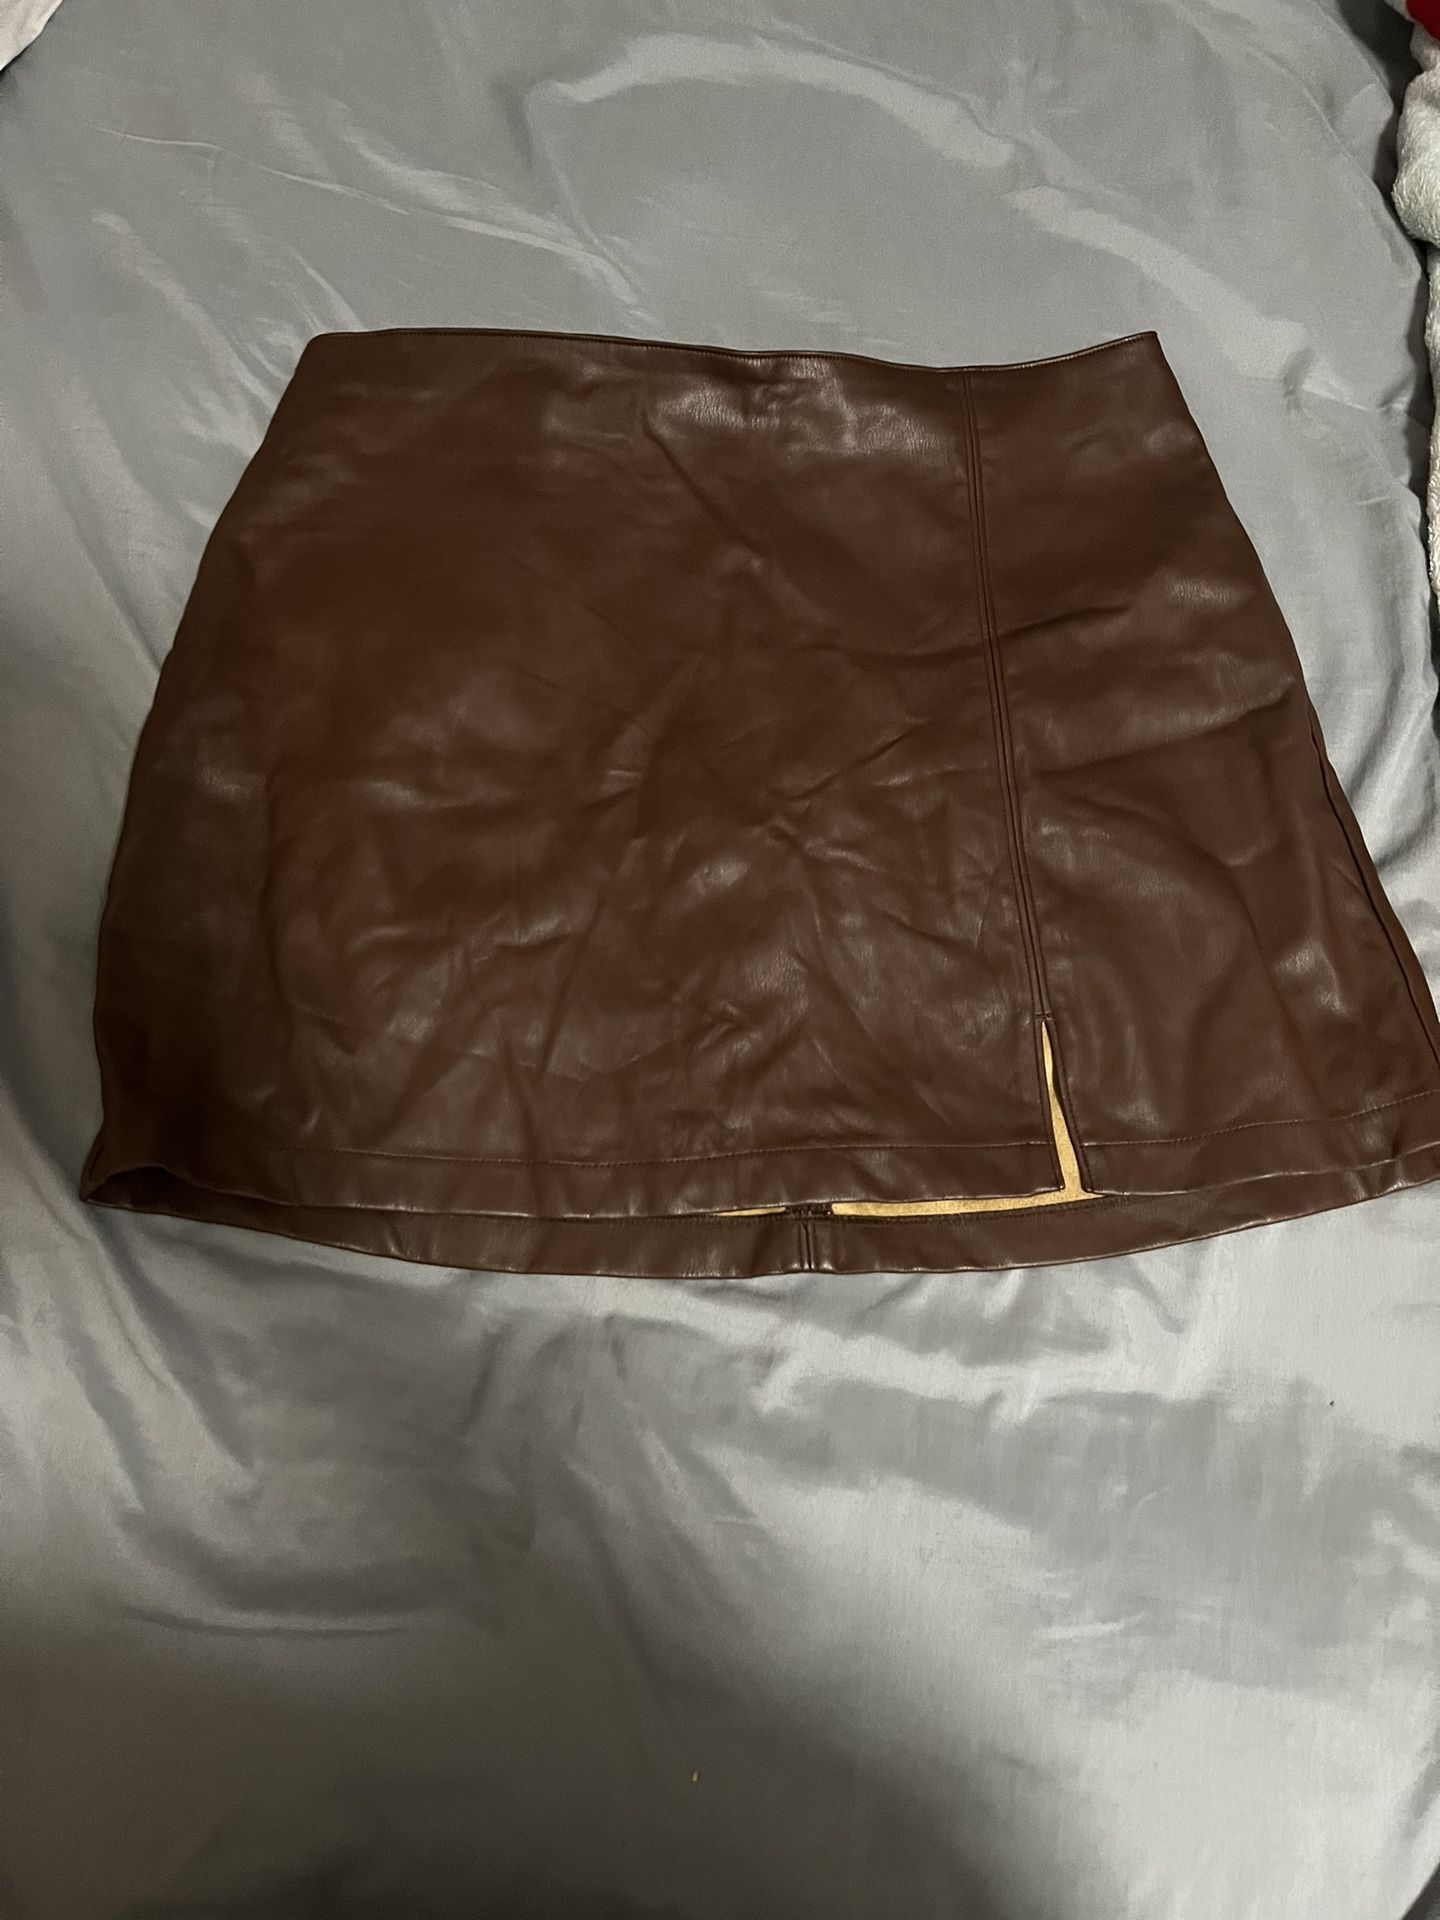 Fake Leather Skirt 